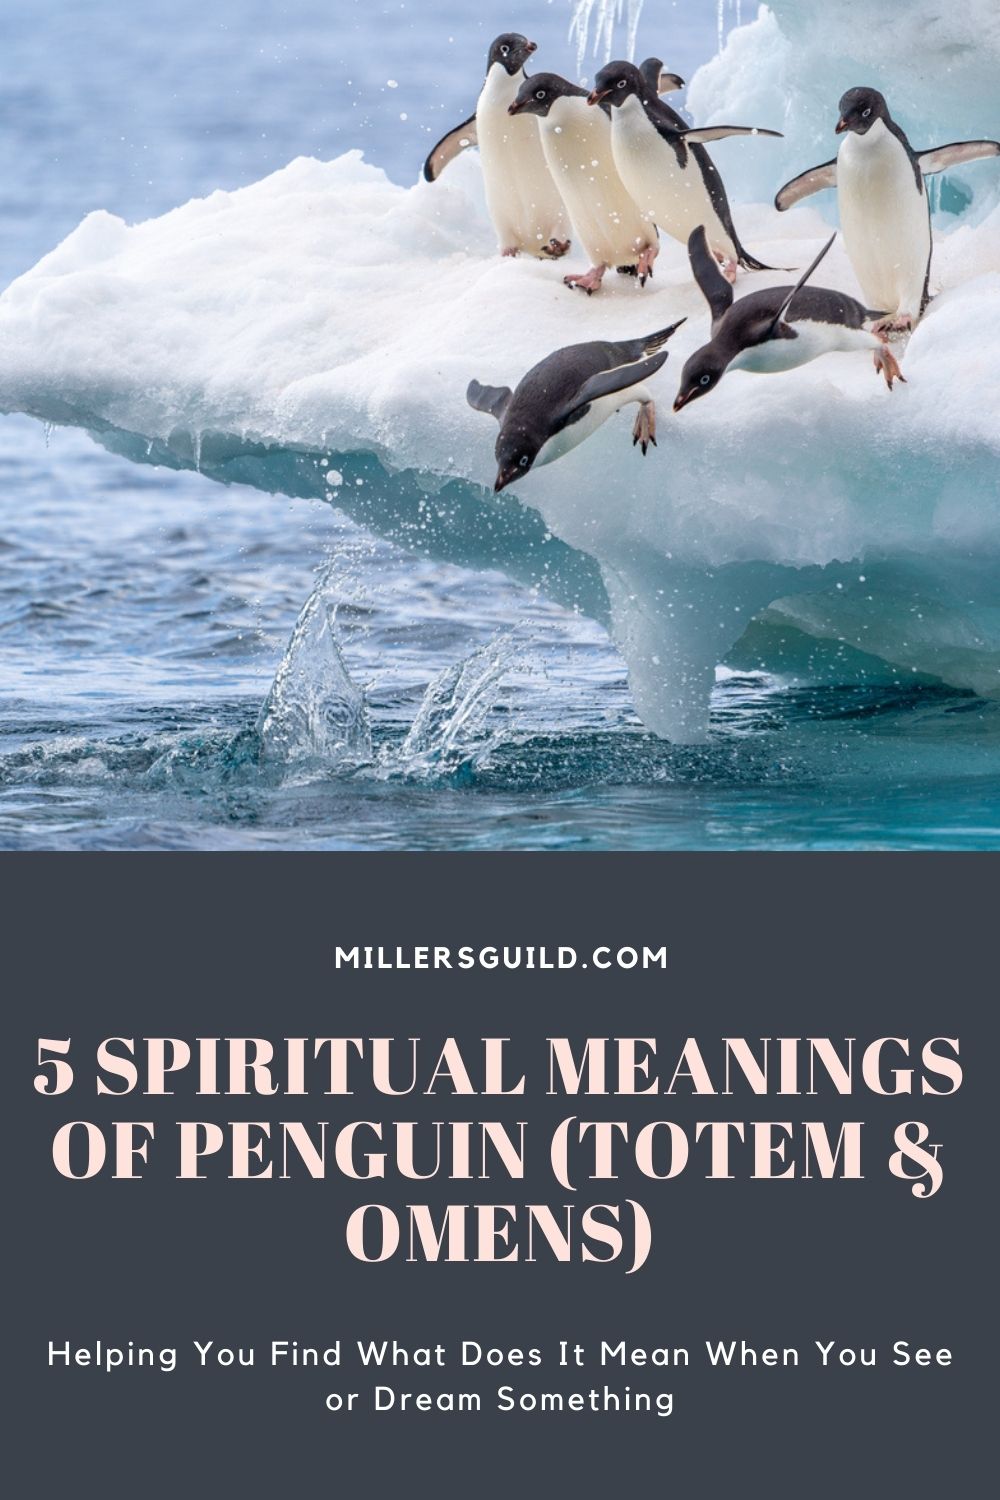 5 Spiritual Meanings of Penguin (Totem & Omens) 1